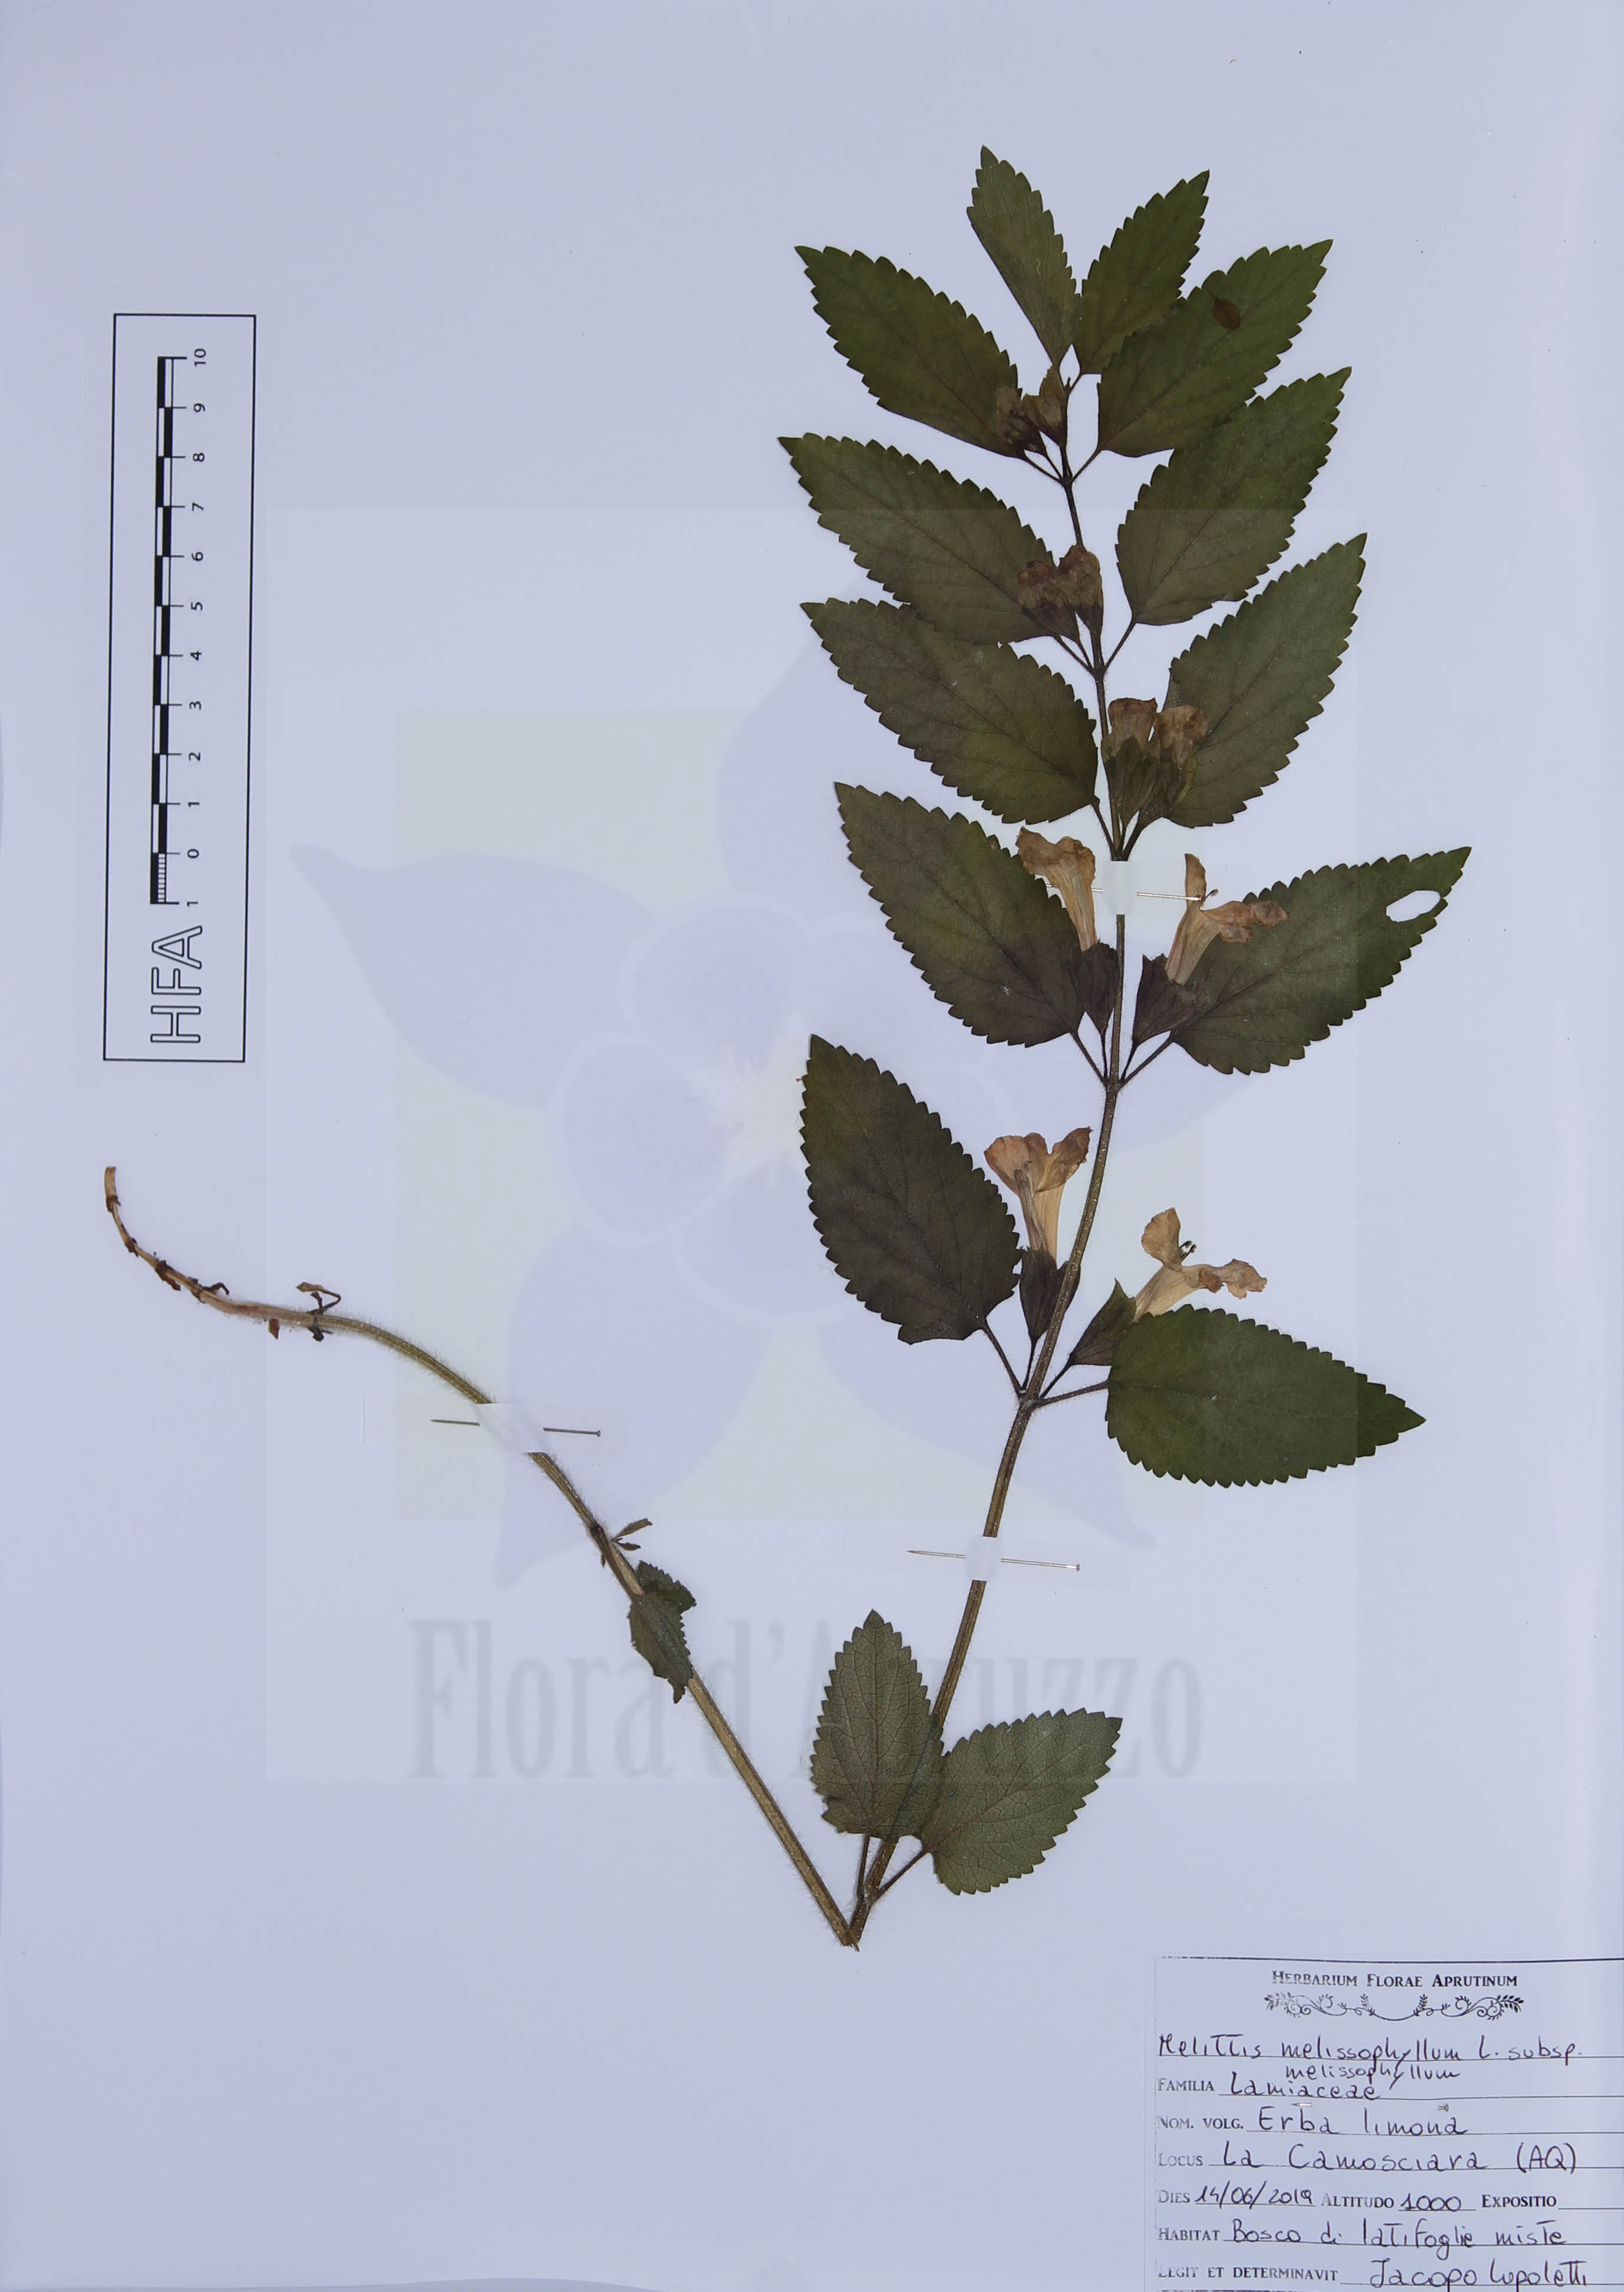 Melittis melissophyllum L. subsp. melissophyllum